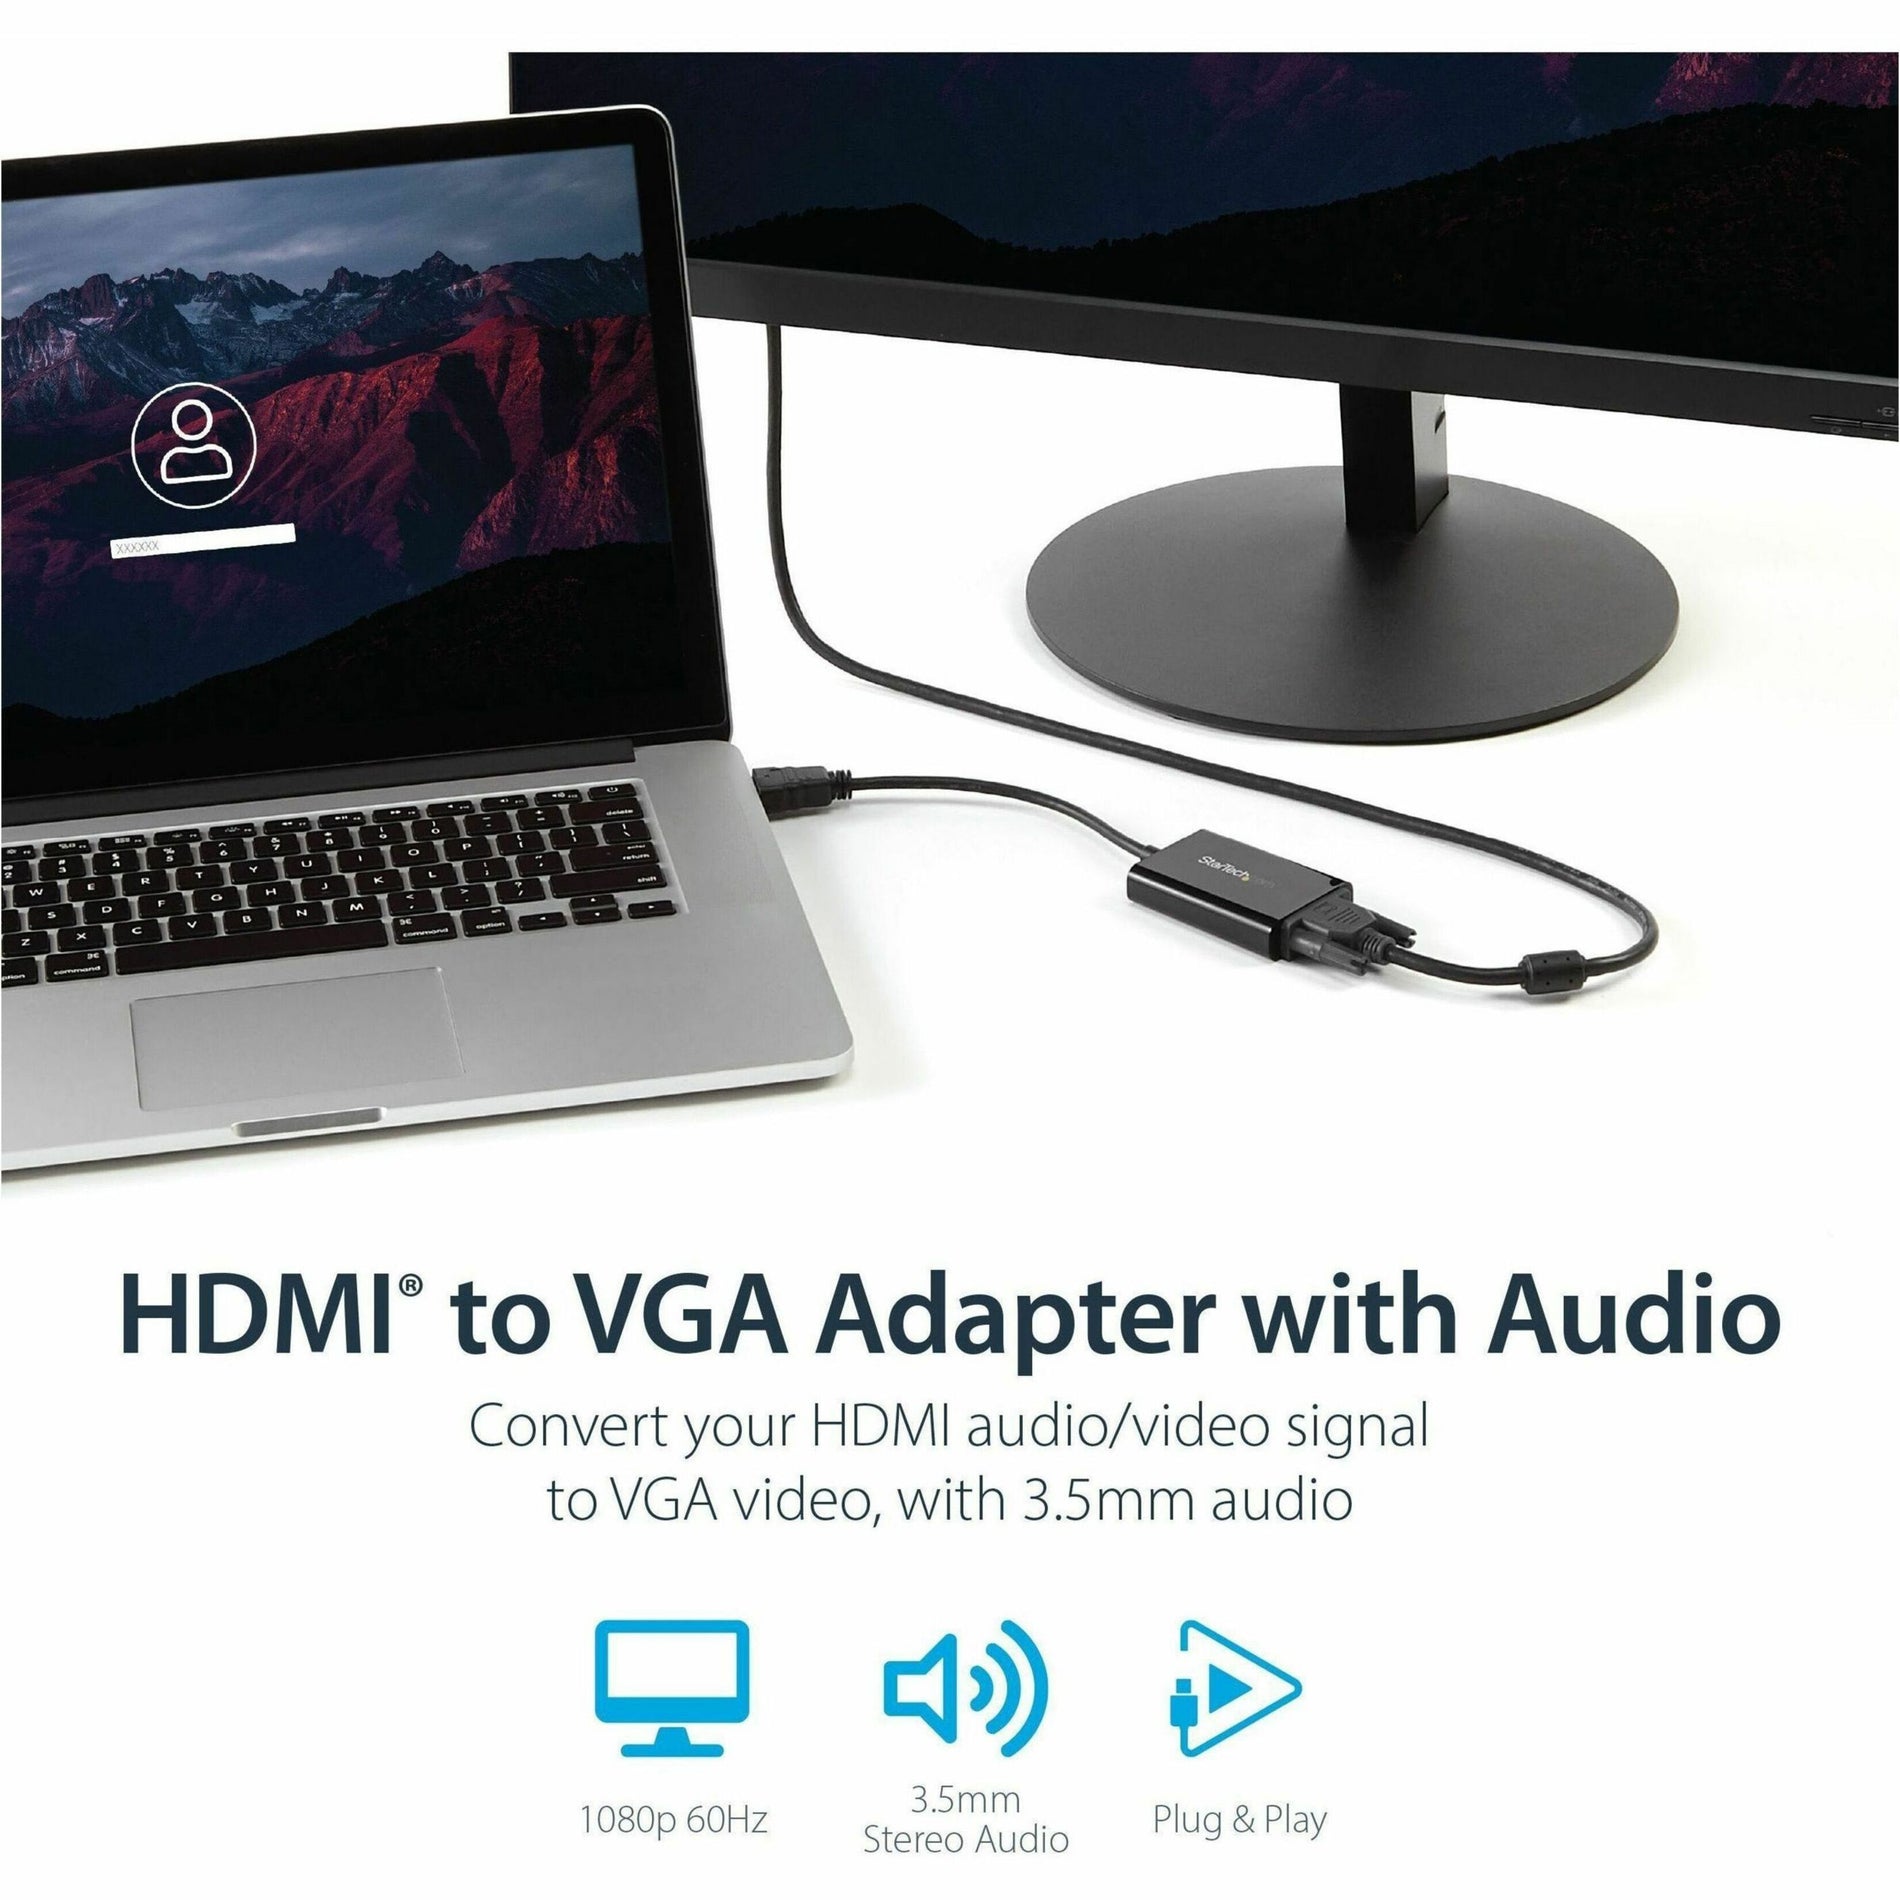 StarTech.com HD2VGAA2 HDMI to VGA Video Adapter Converter with Audio, 1920x1200, for Desktop PC / Laptop / Ultrabook